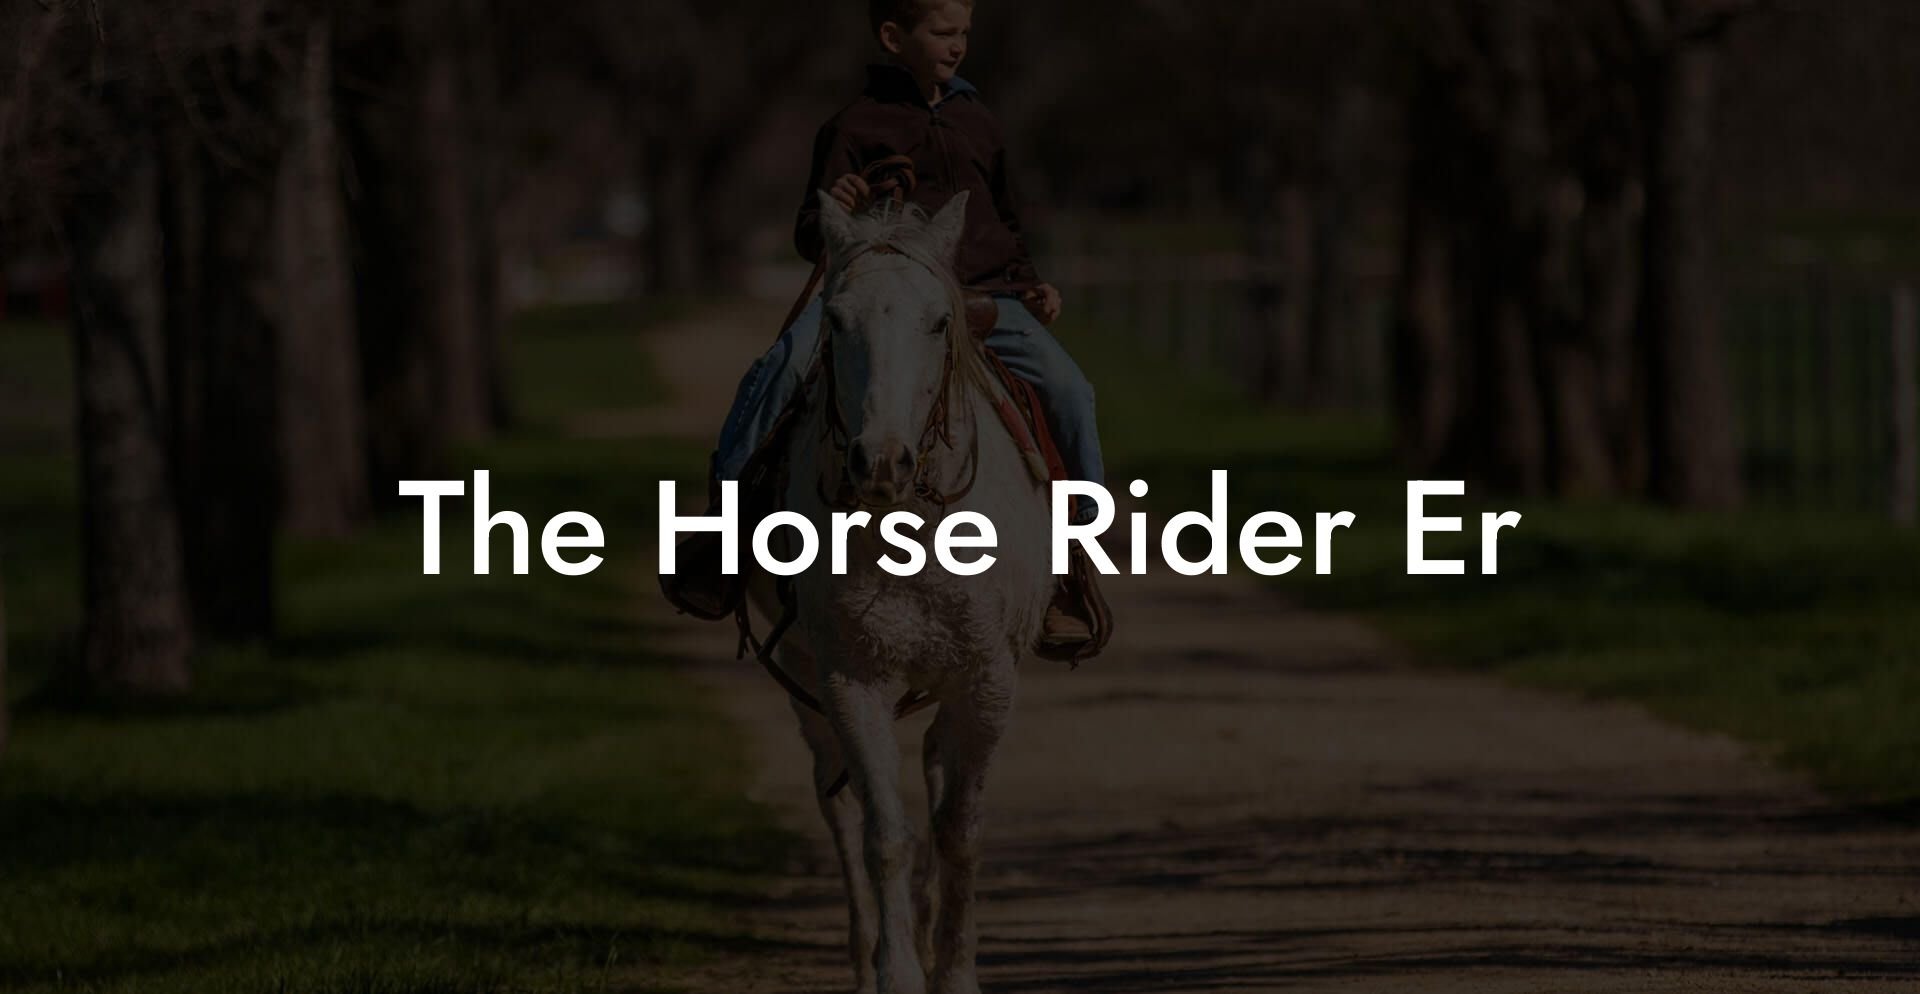 The Horse Rider Er